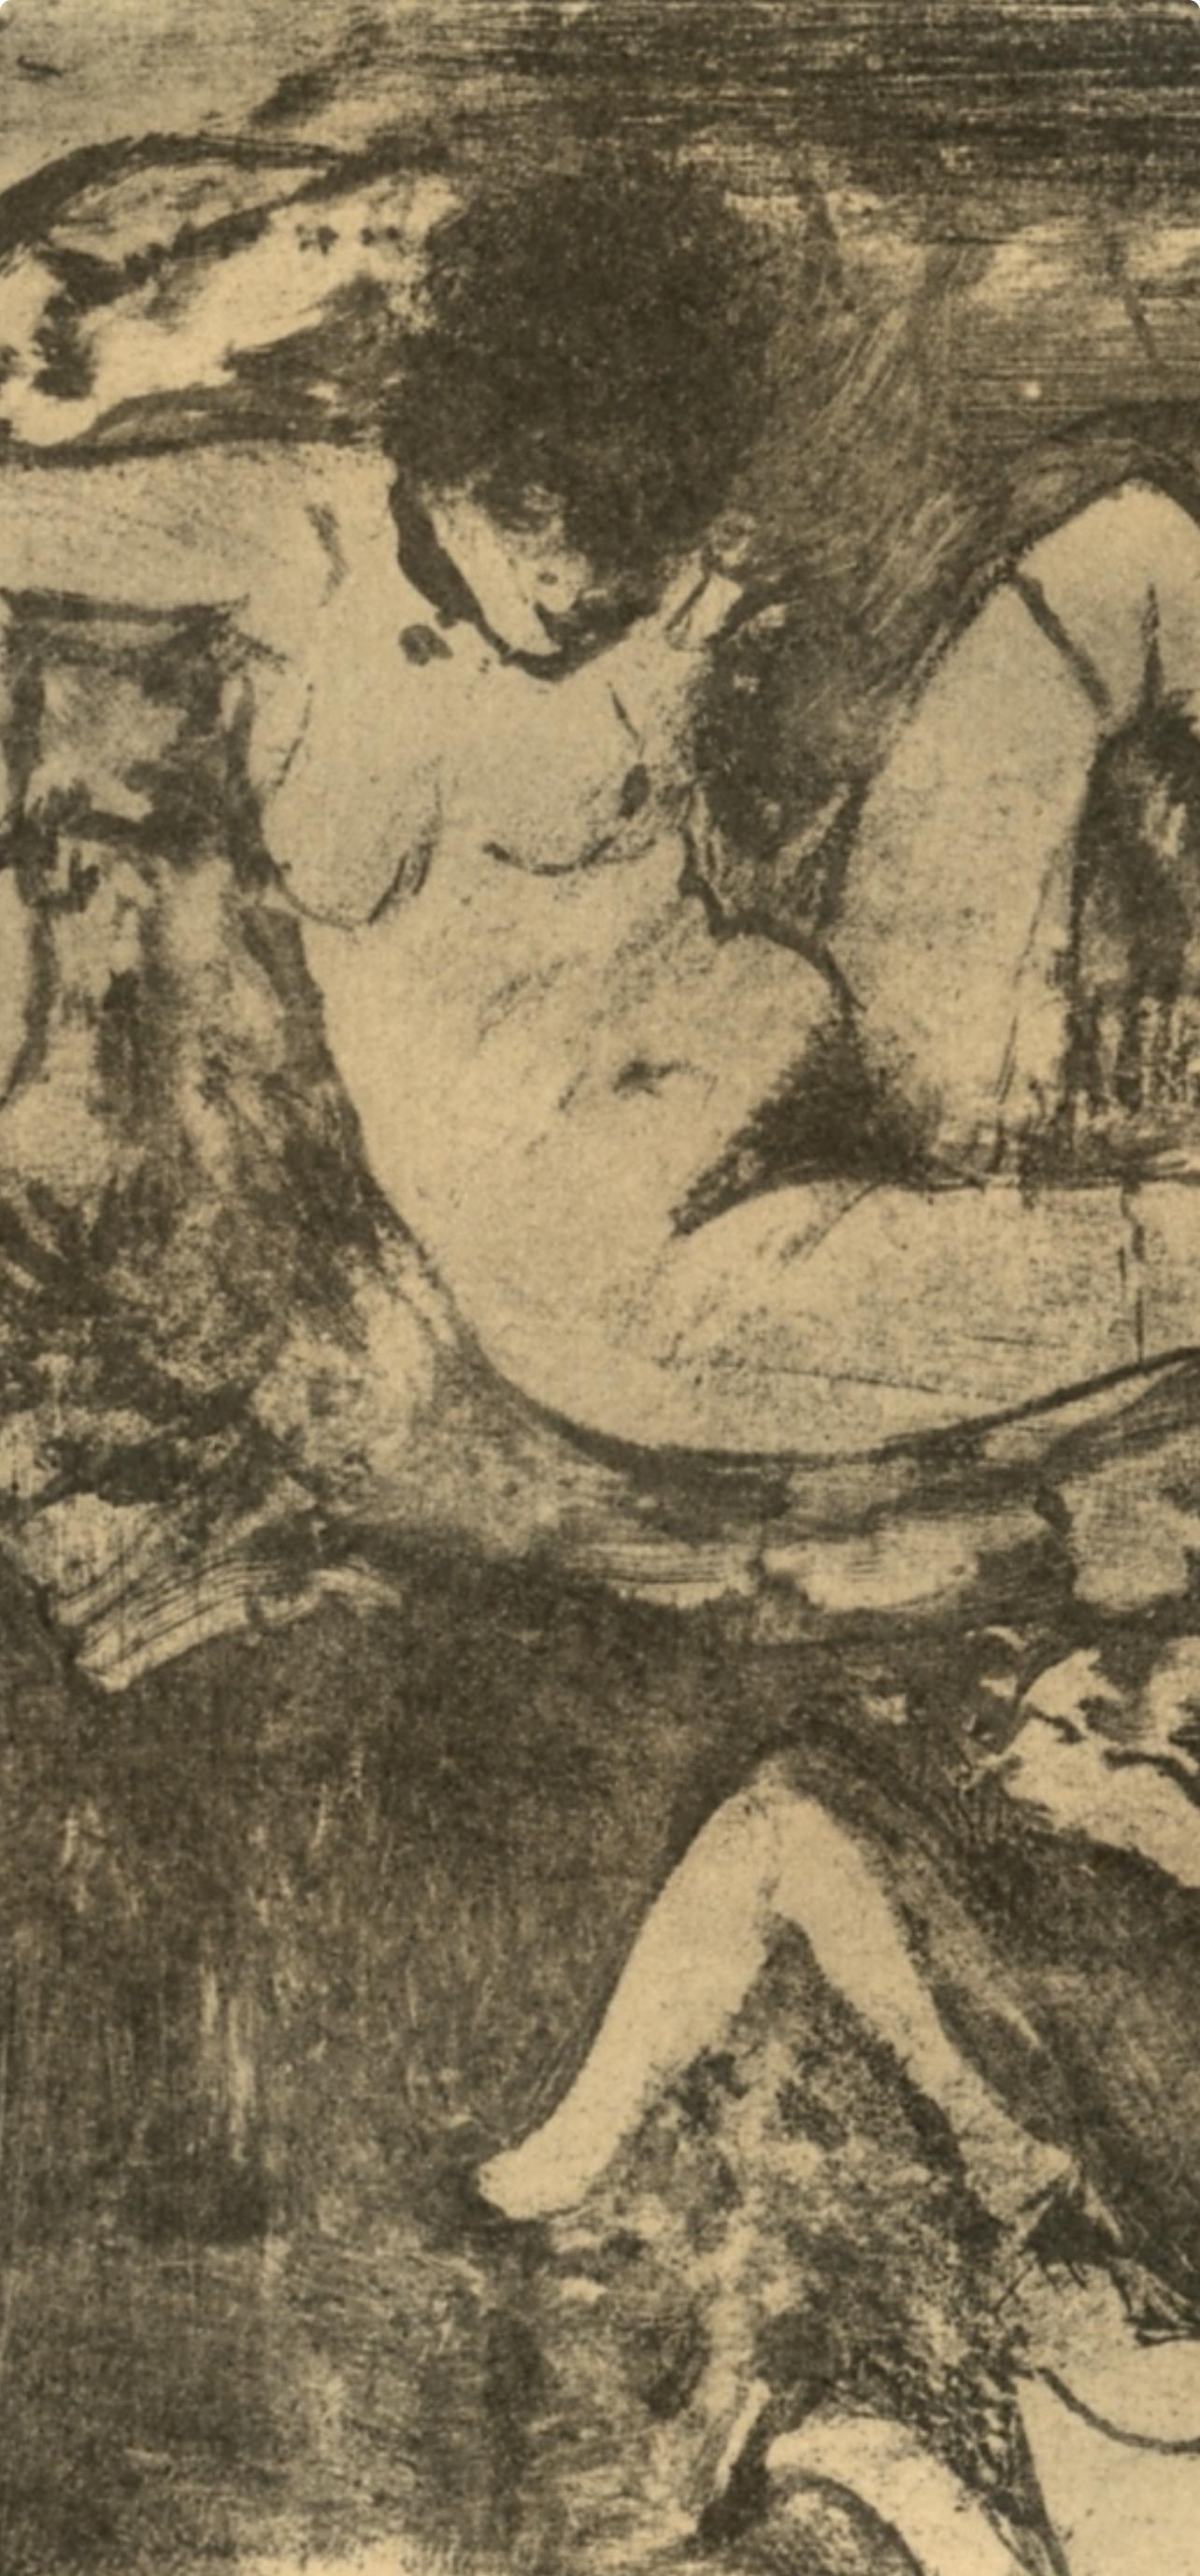 Degas, Les Femmes, Les Monotypes (nach) – Print von Edgar Degas